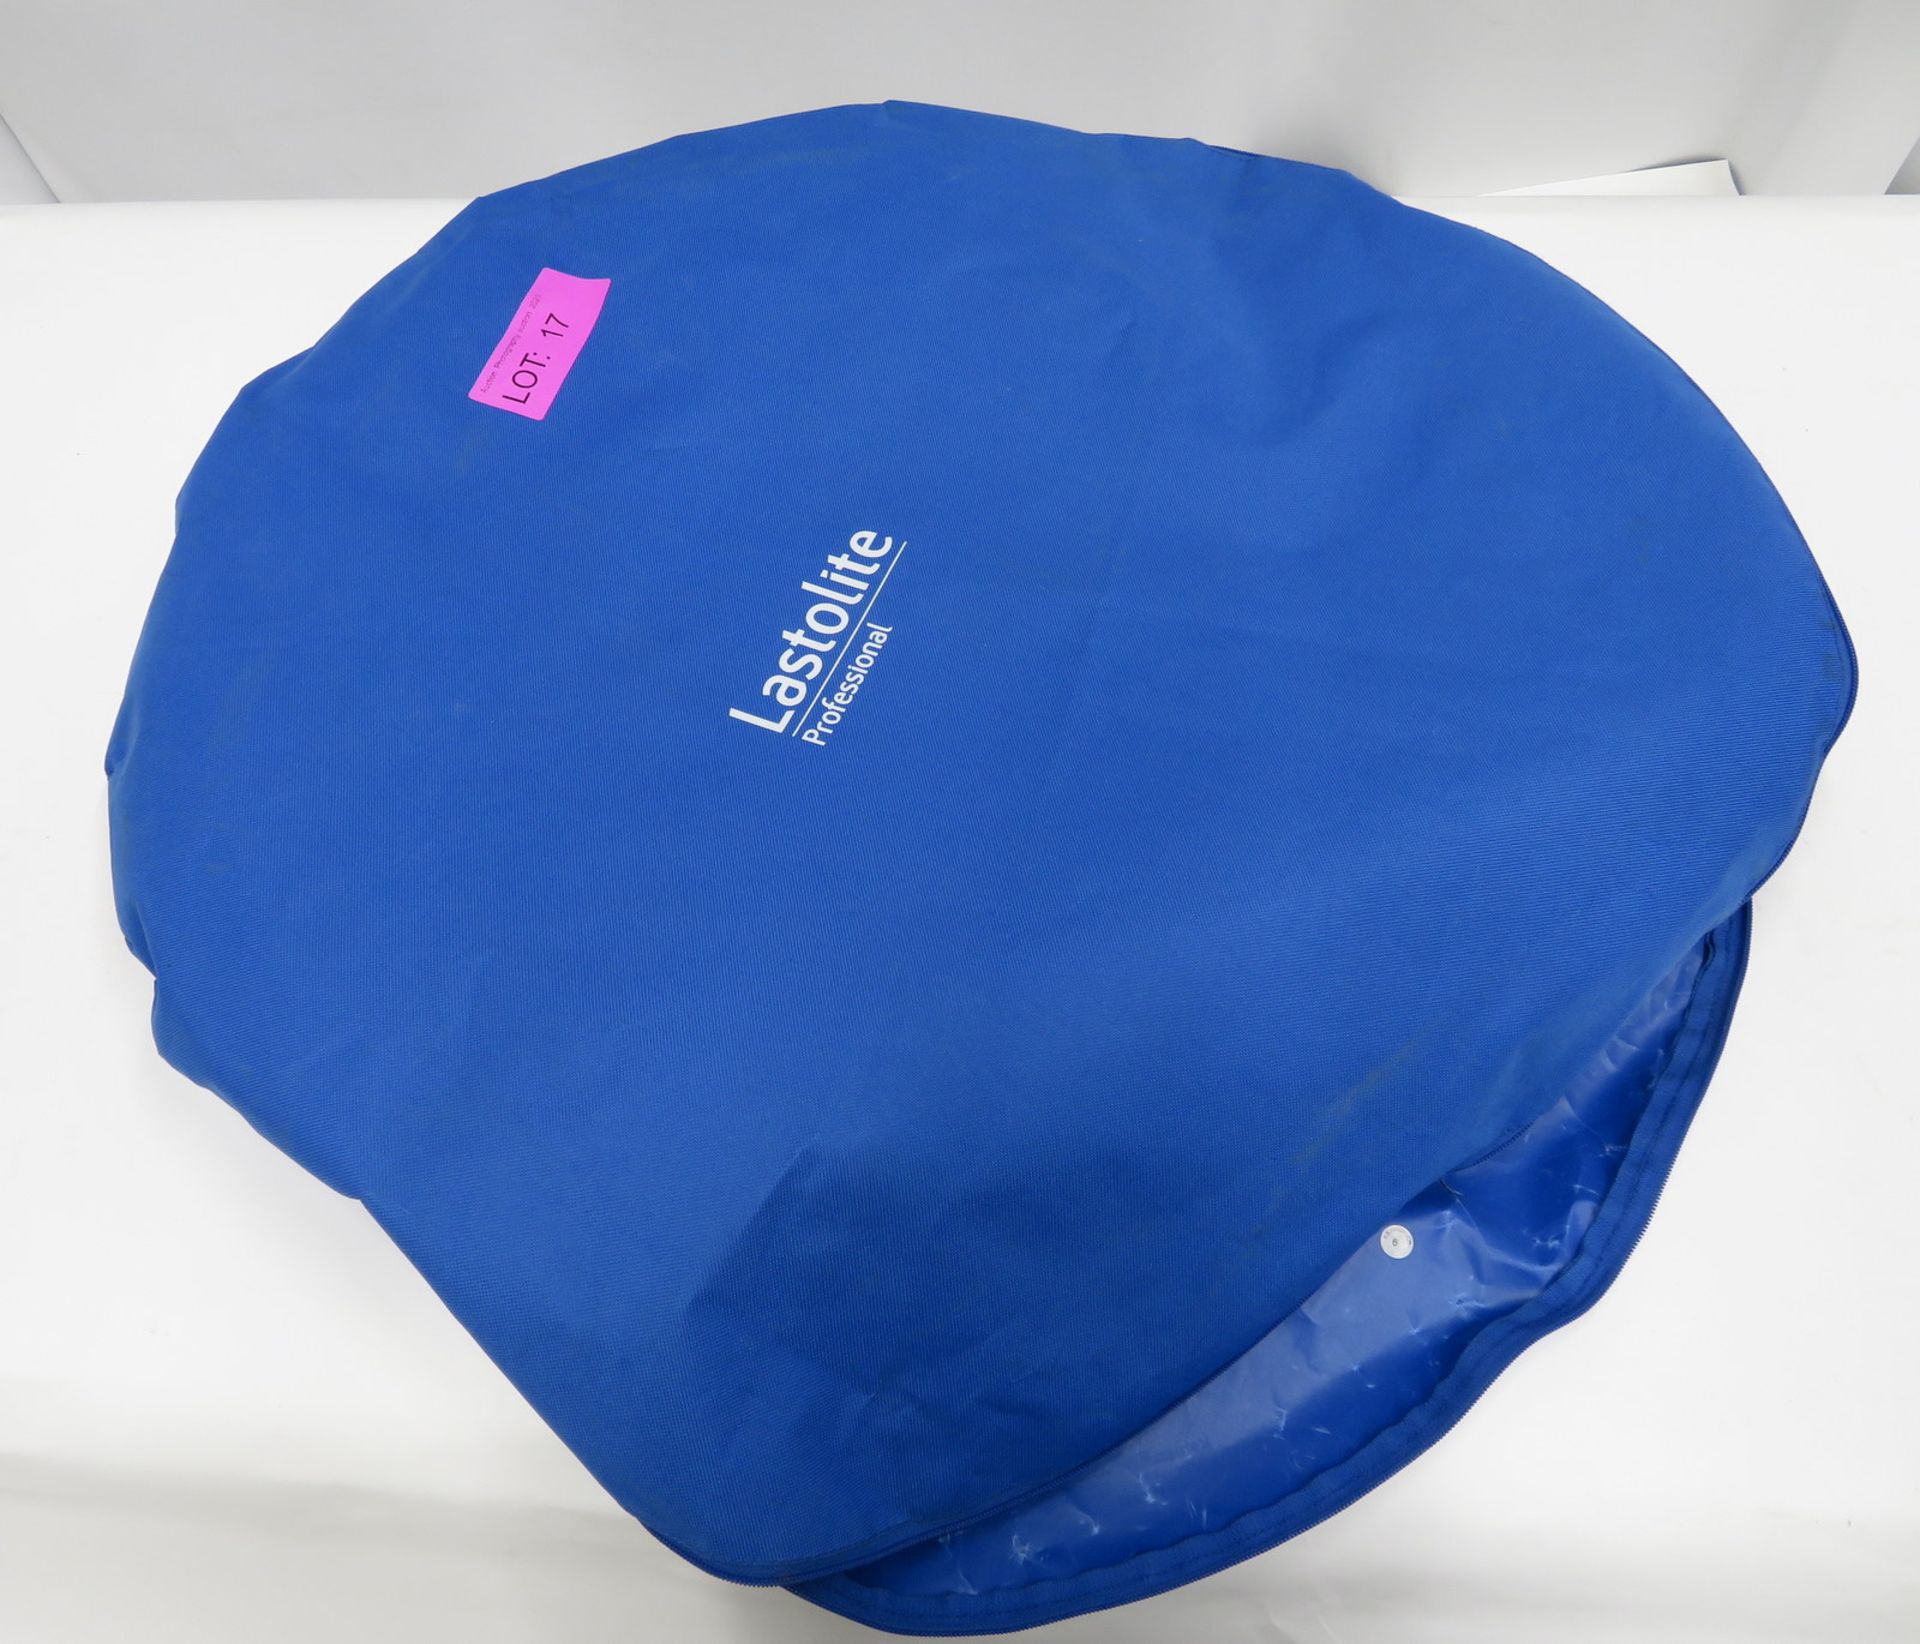 Lastolite pop up reversible background, grey / blue, 1.8m x 1.5m in carry bag - Image 3 of 3